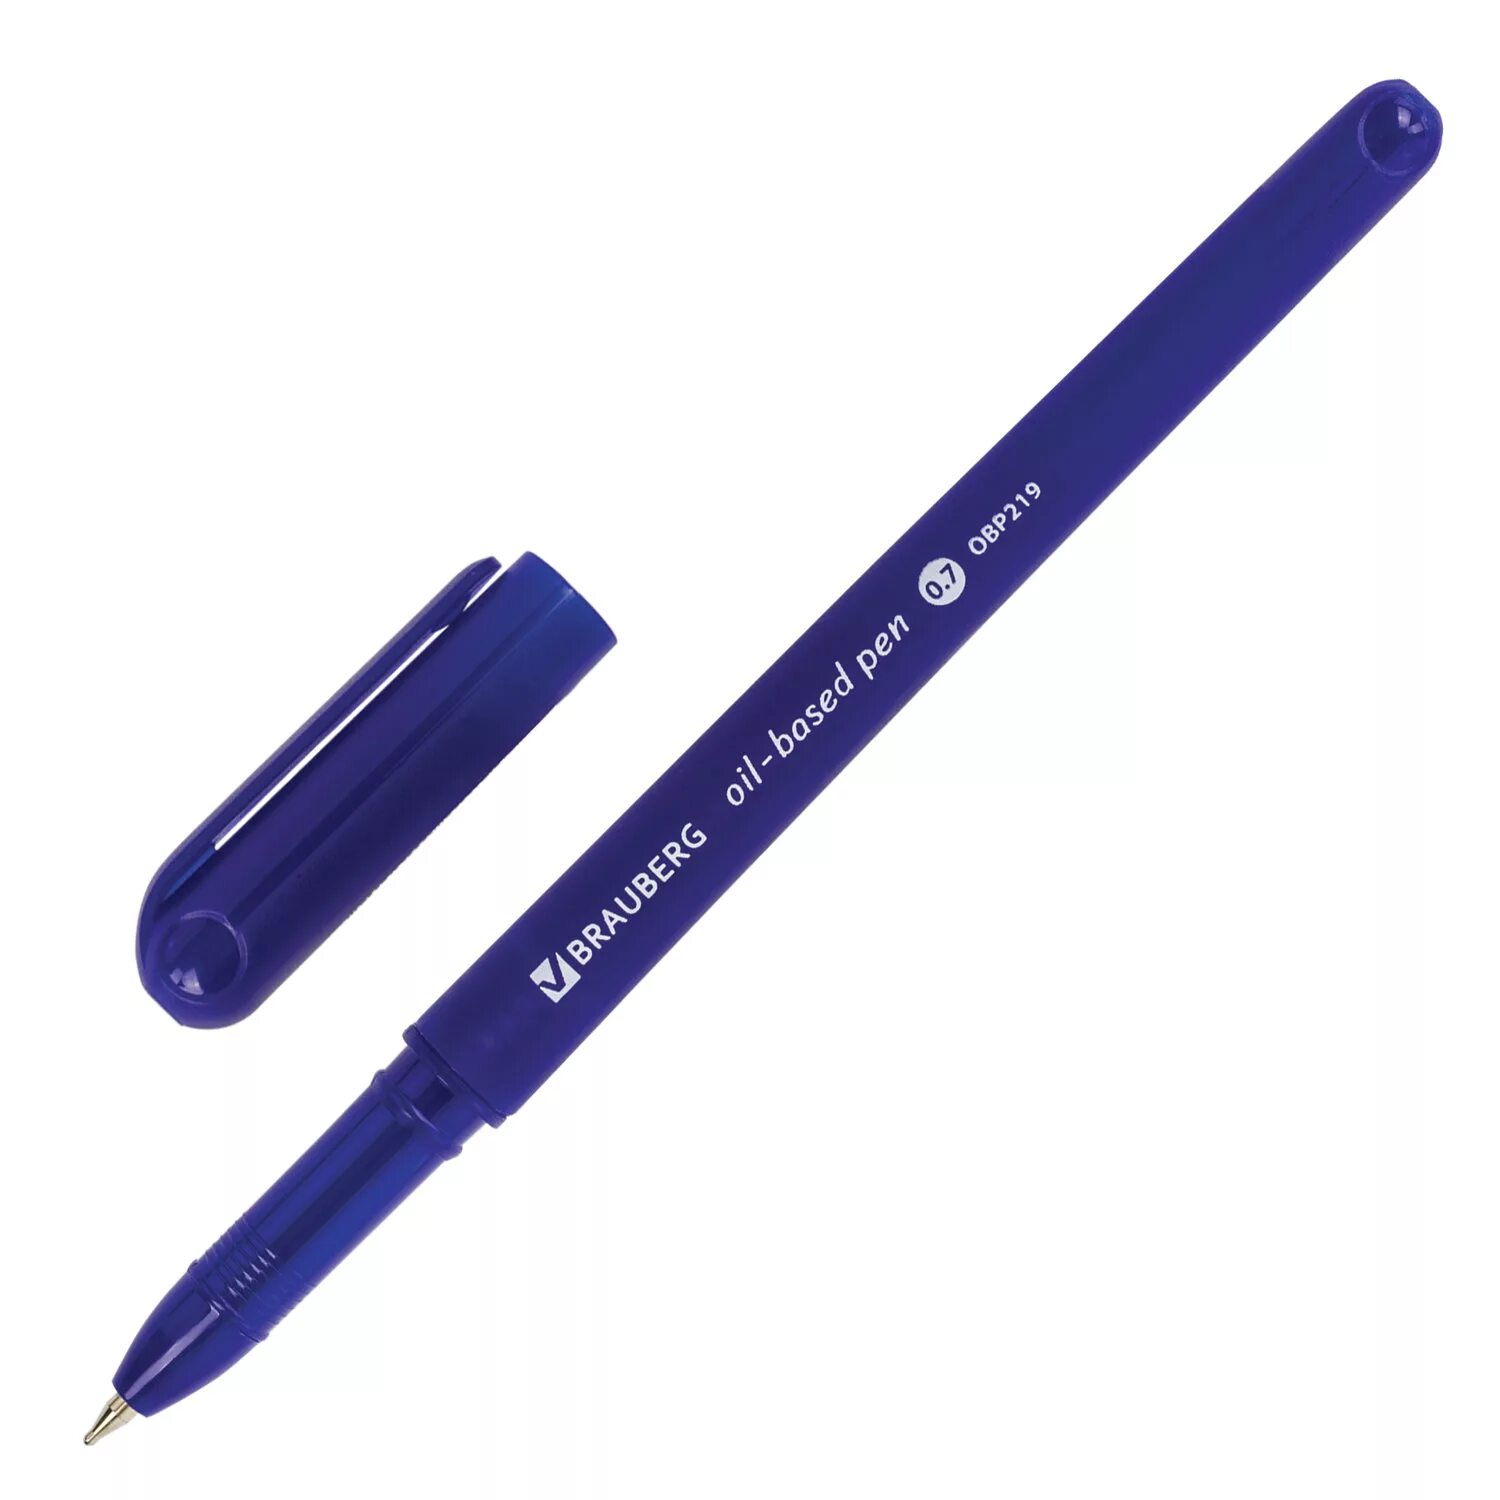 Ручка БРАУБЕРГ шариковая синий корпус. Ручка шариковая синяя БРАУБЕРГ. Ручка БРАУБЕРГ 0.7 масляная. Ручка BRAUBERG Oil based Pen. Brauberg 0.7